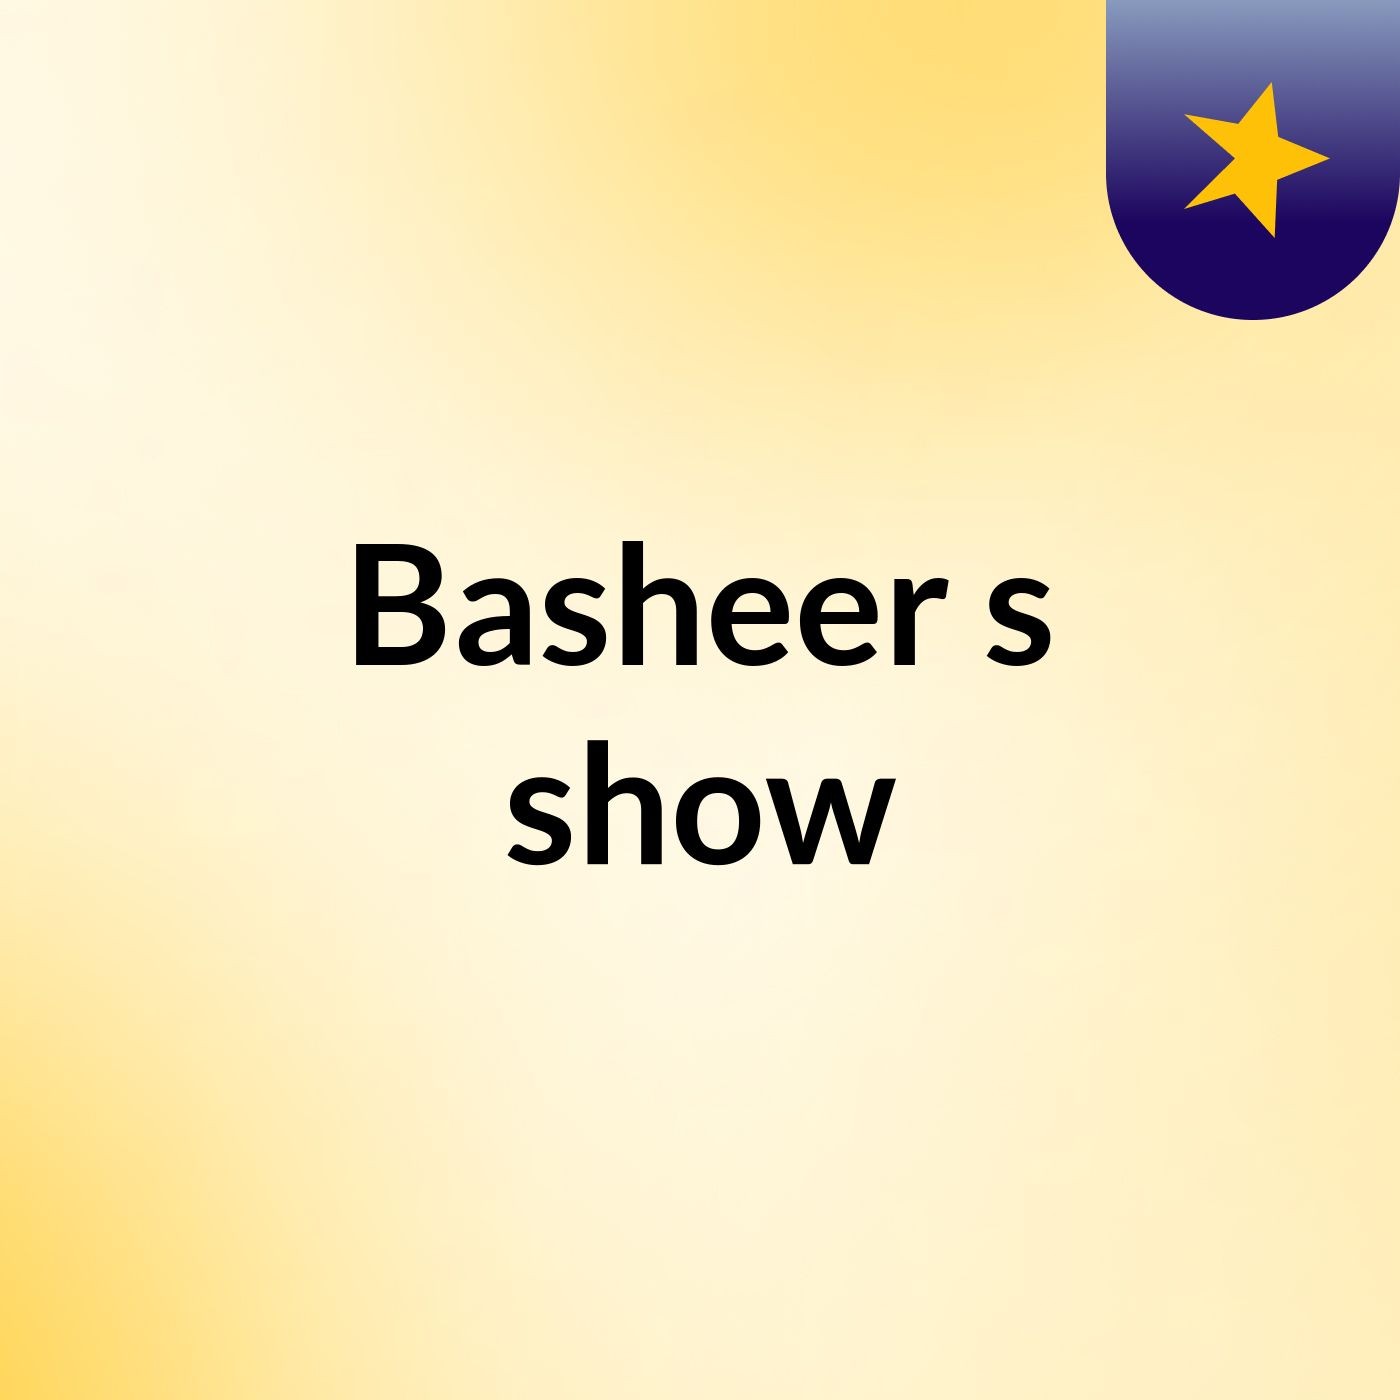 Basheer's show